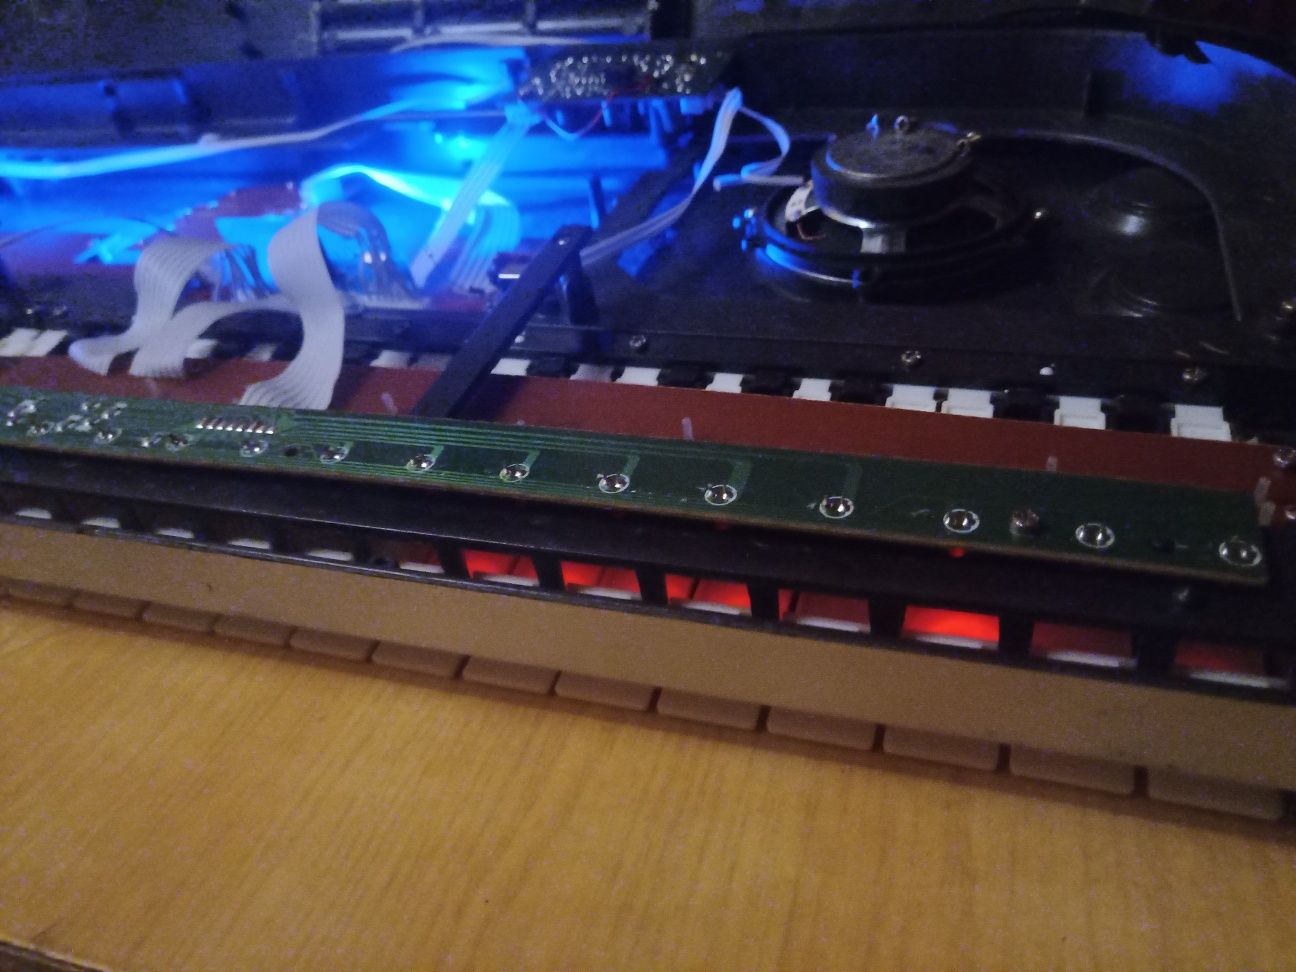 PlayOn FW11230 синтезатор обучающий на запчасти